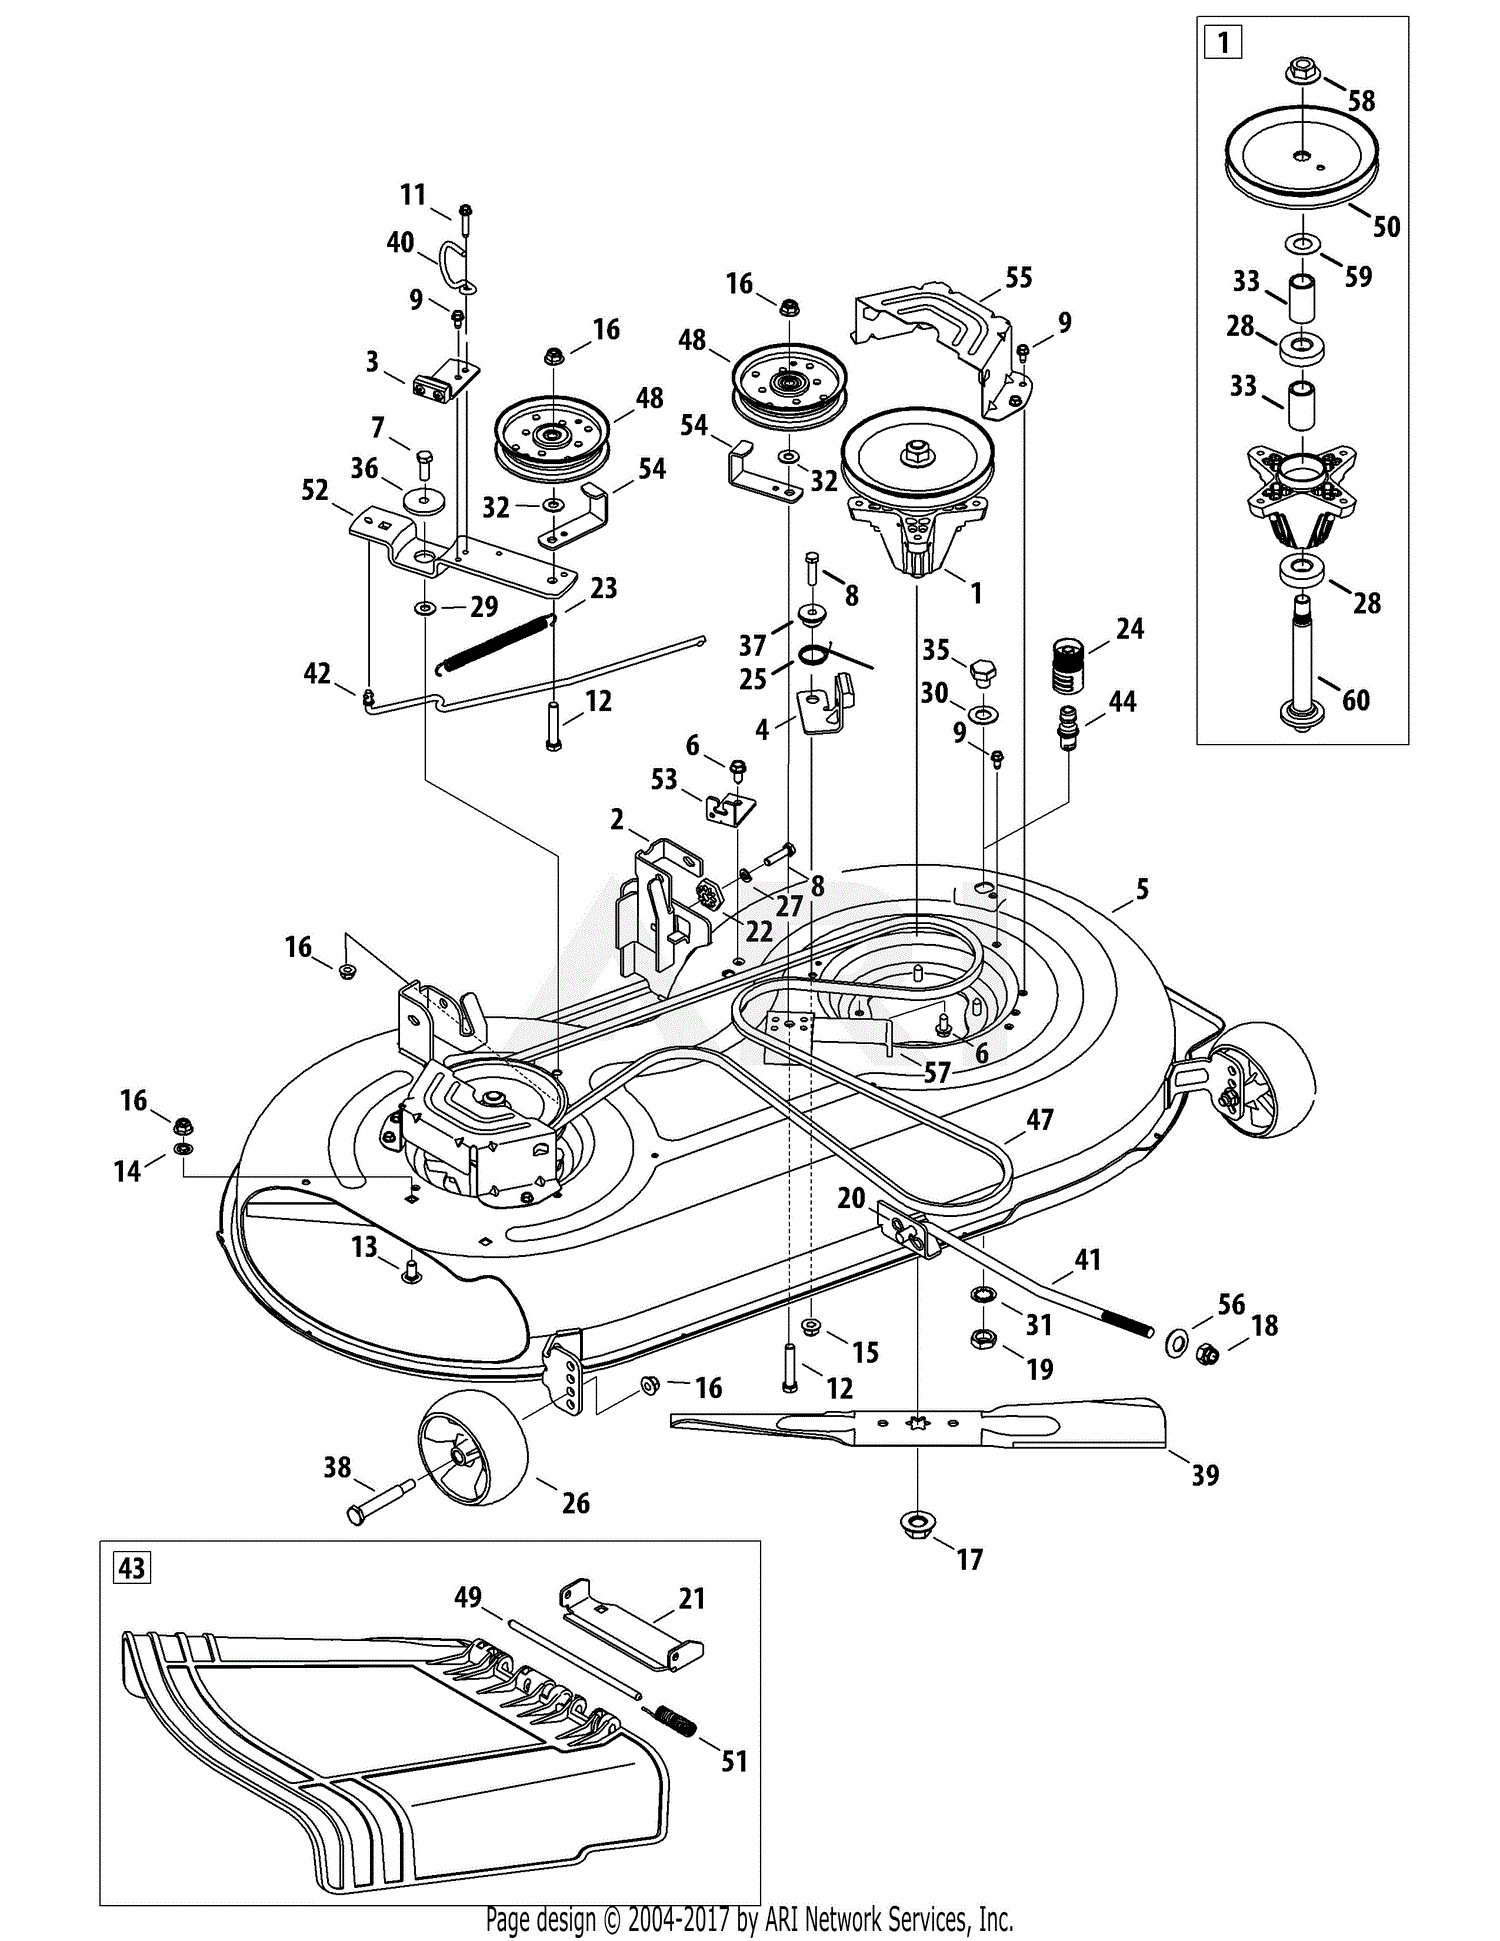 35 Scotts Riding Mower Parts Diagram Wiring Diagram List